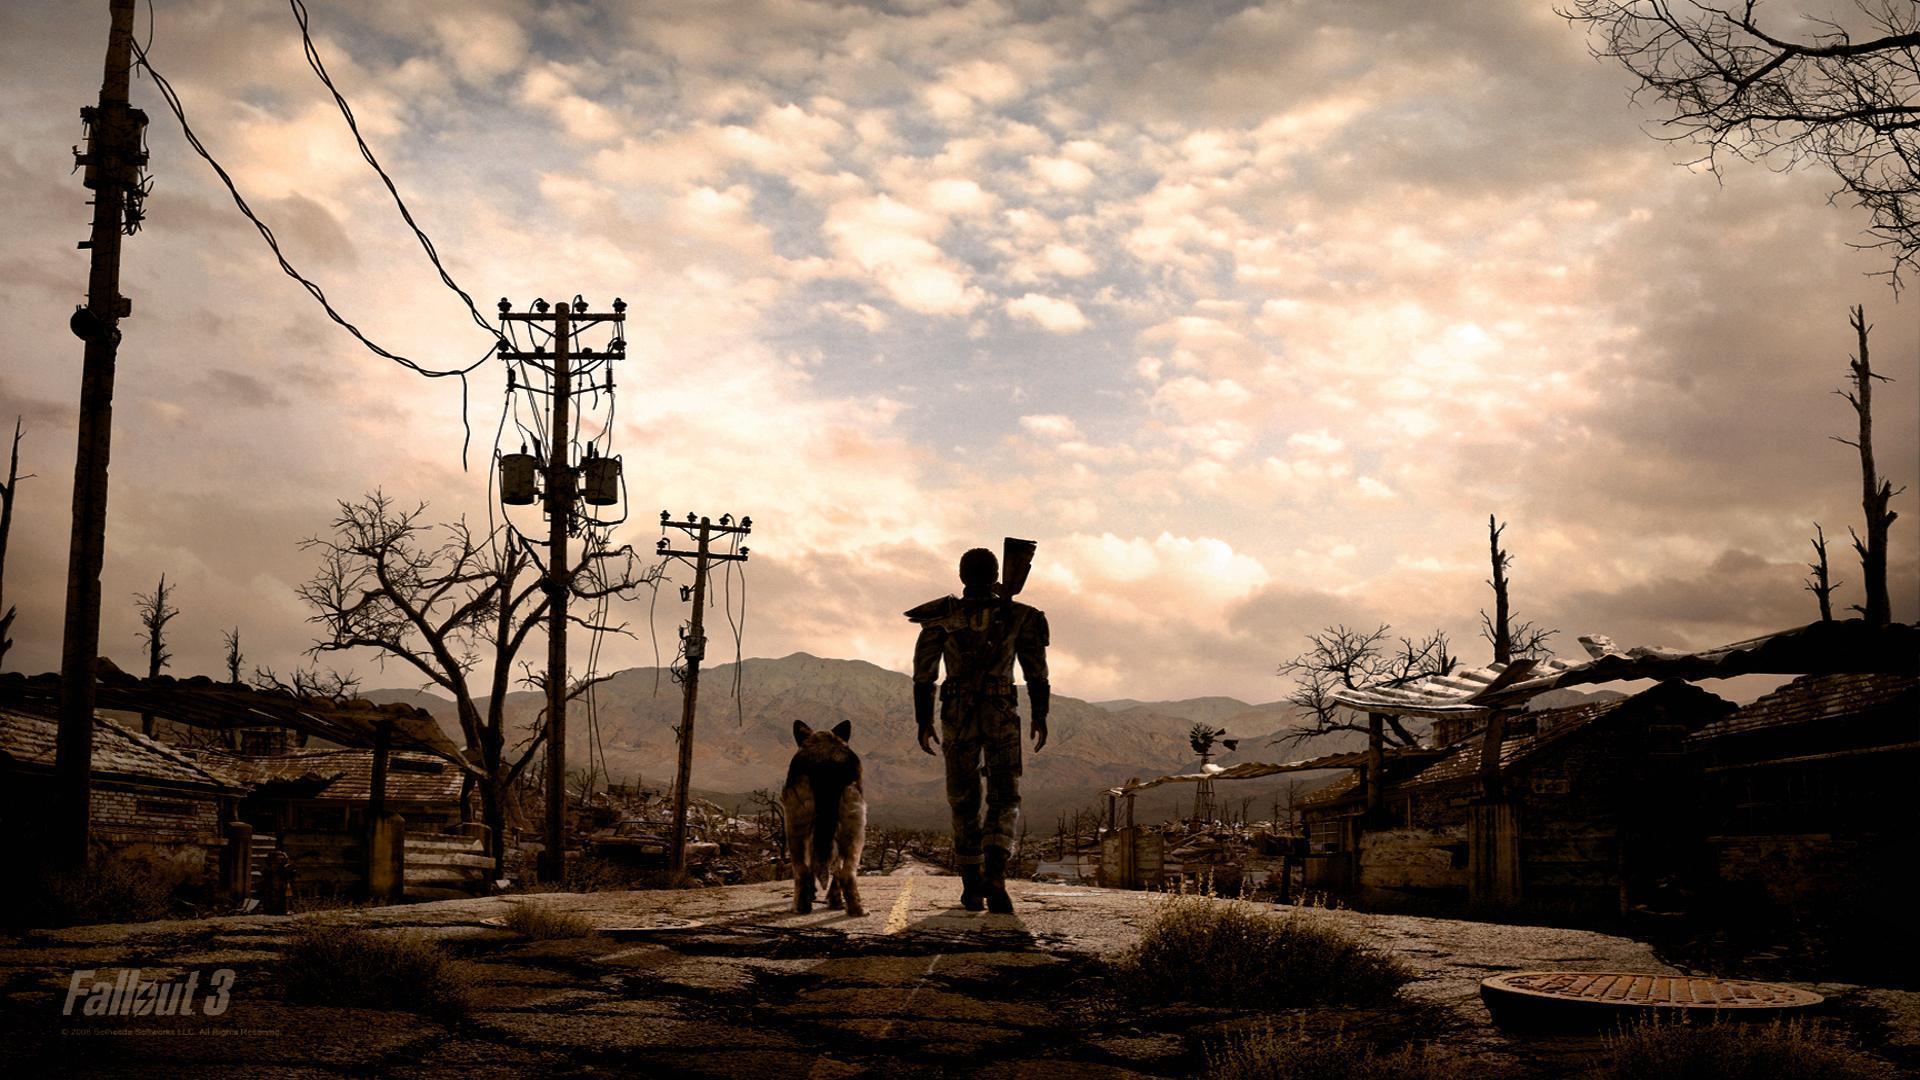  فال‌آوت 3 (Fallout 3)